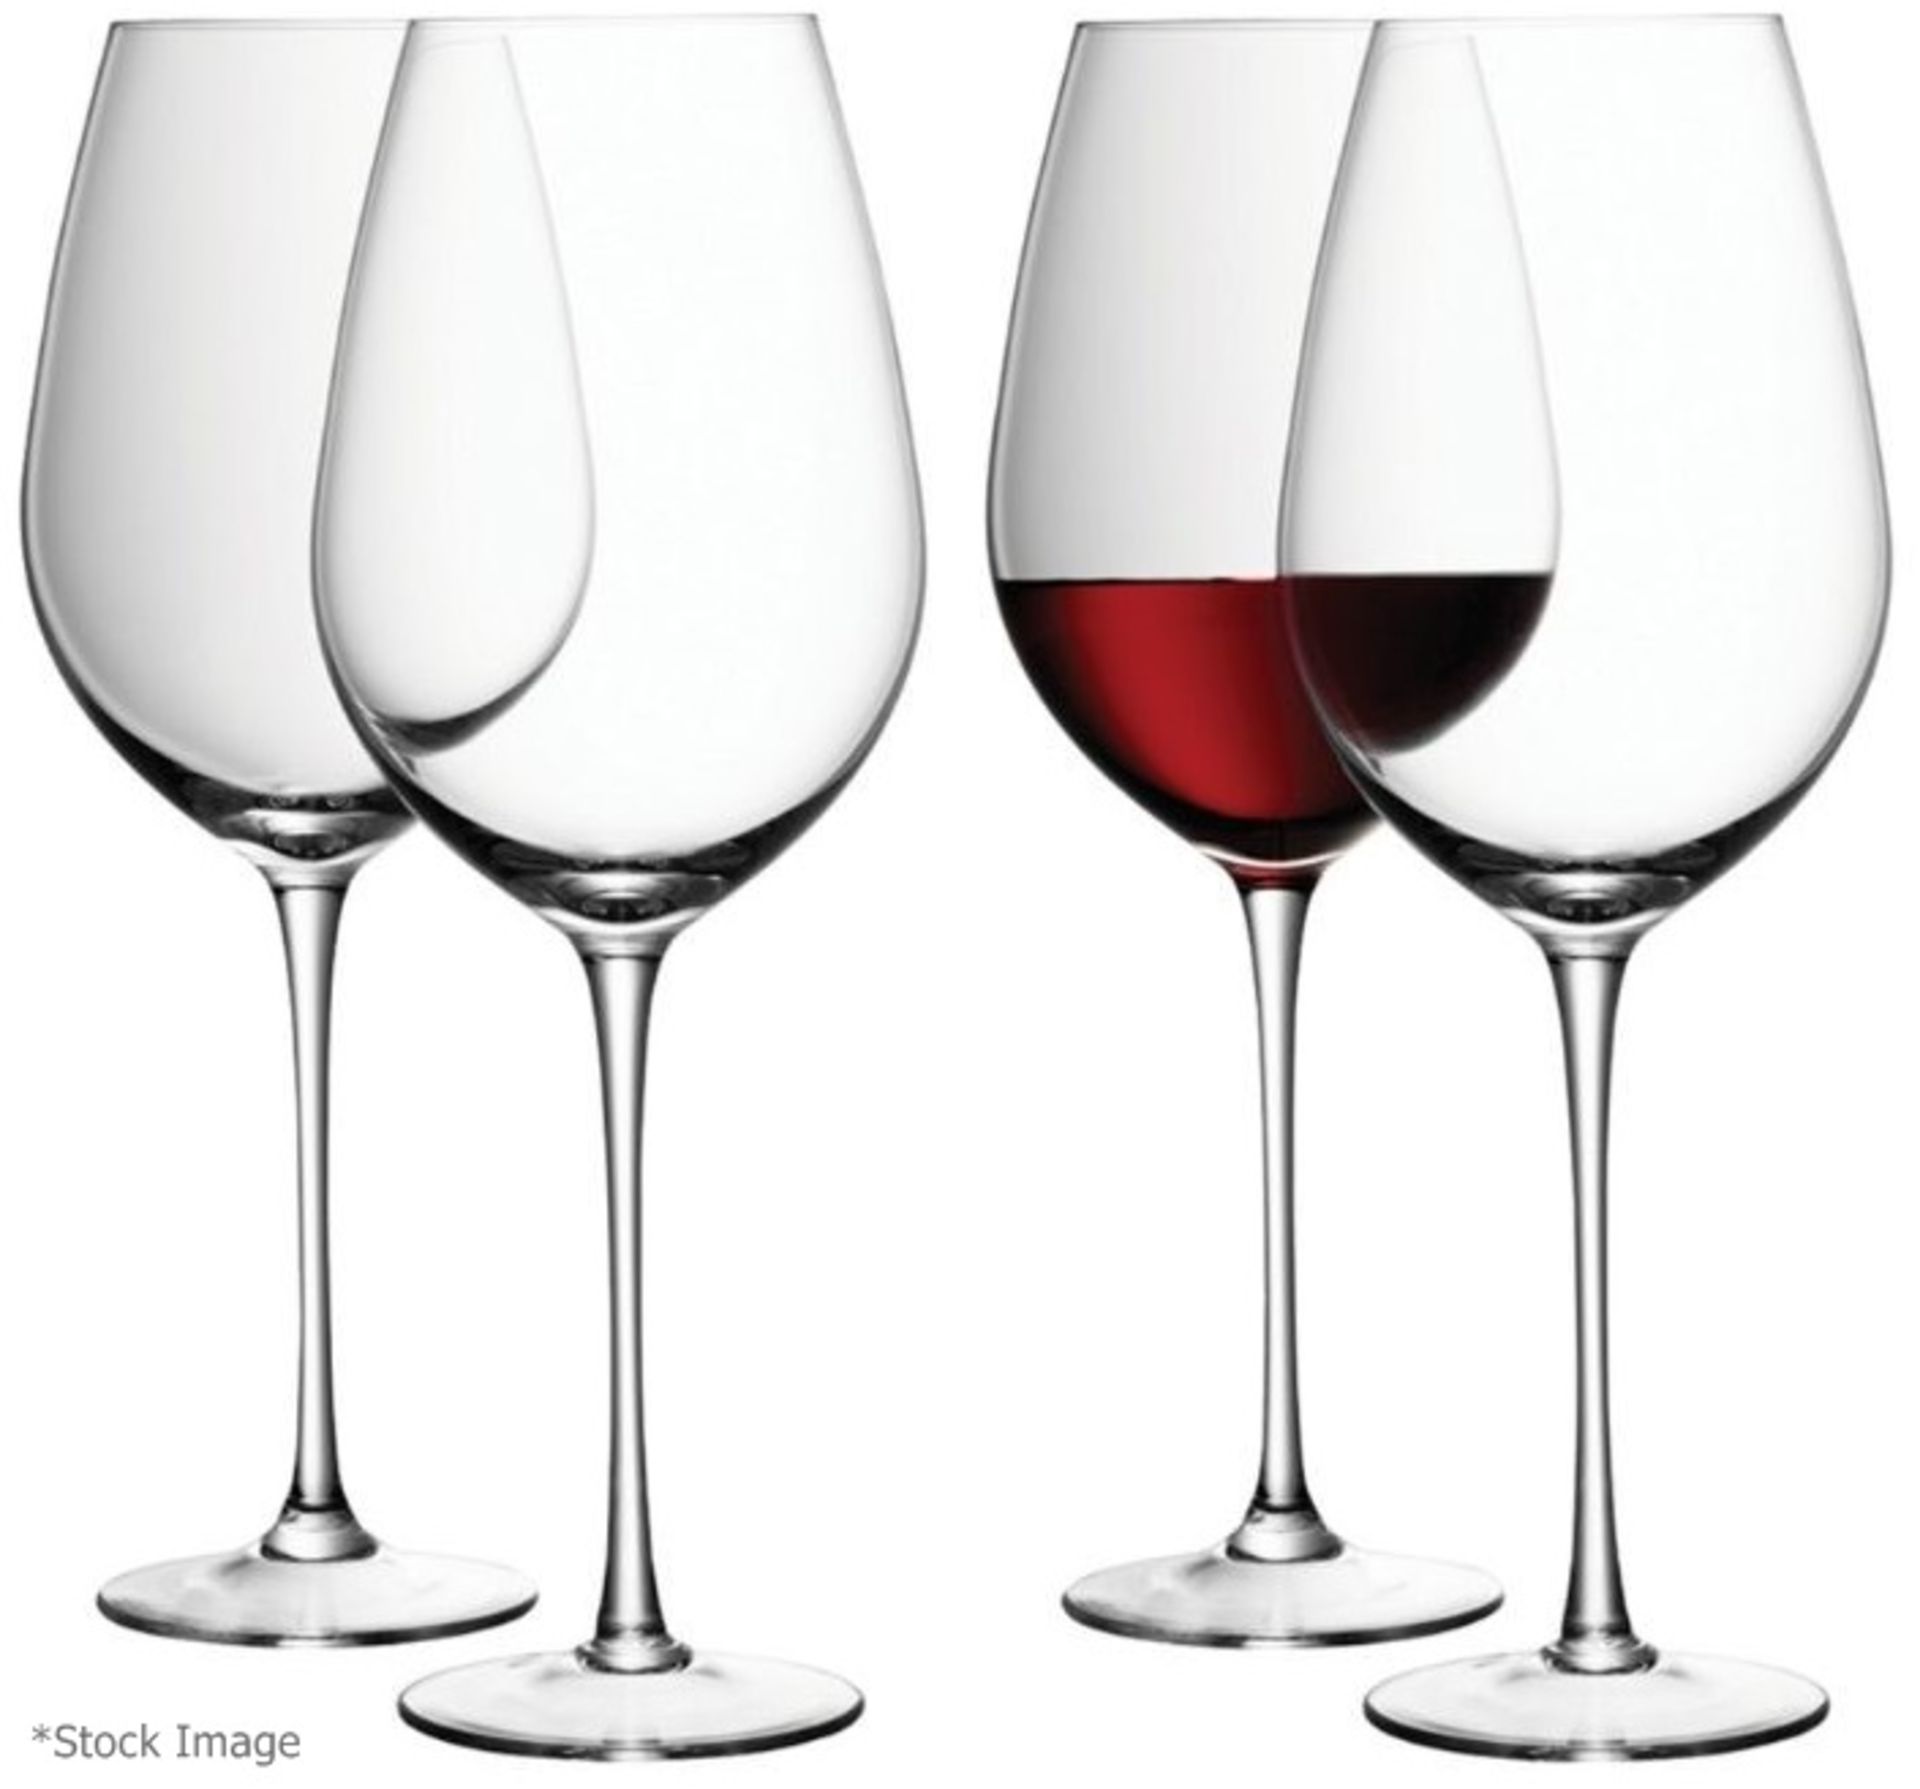 Set Of 4 x LSA INTERNATIONAL Mouth-Blown Red Wine Goblets (850ml) - Original Price £99.95